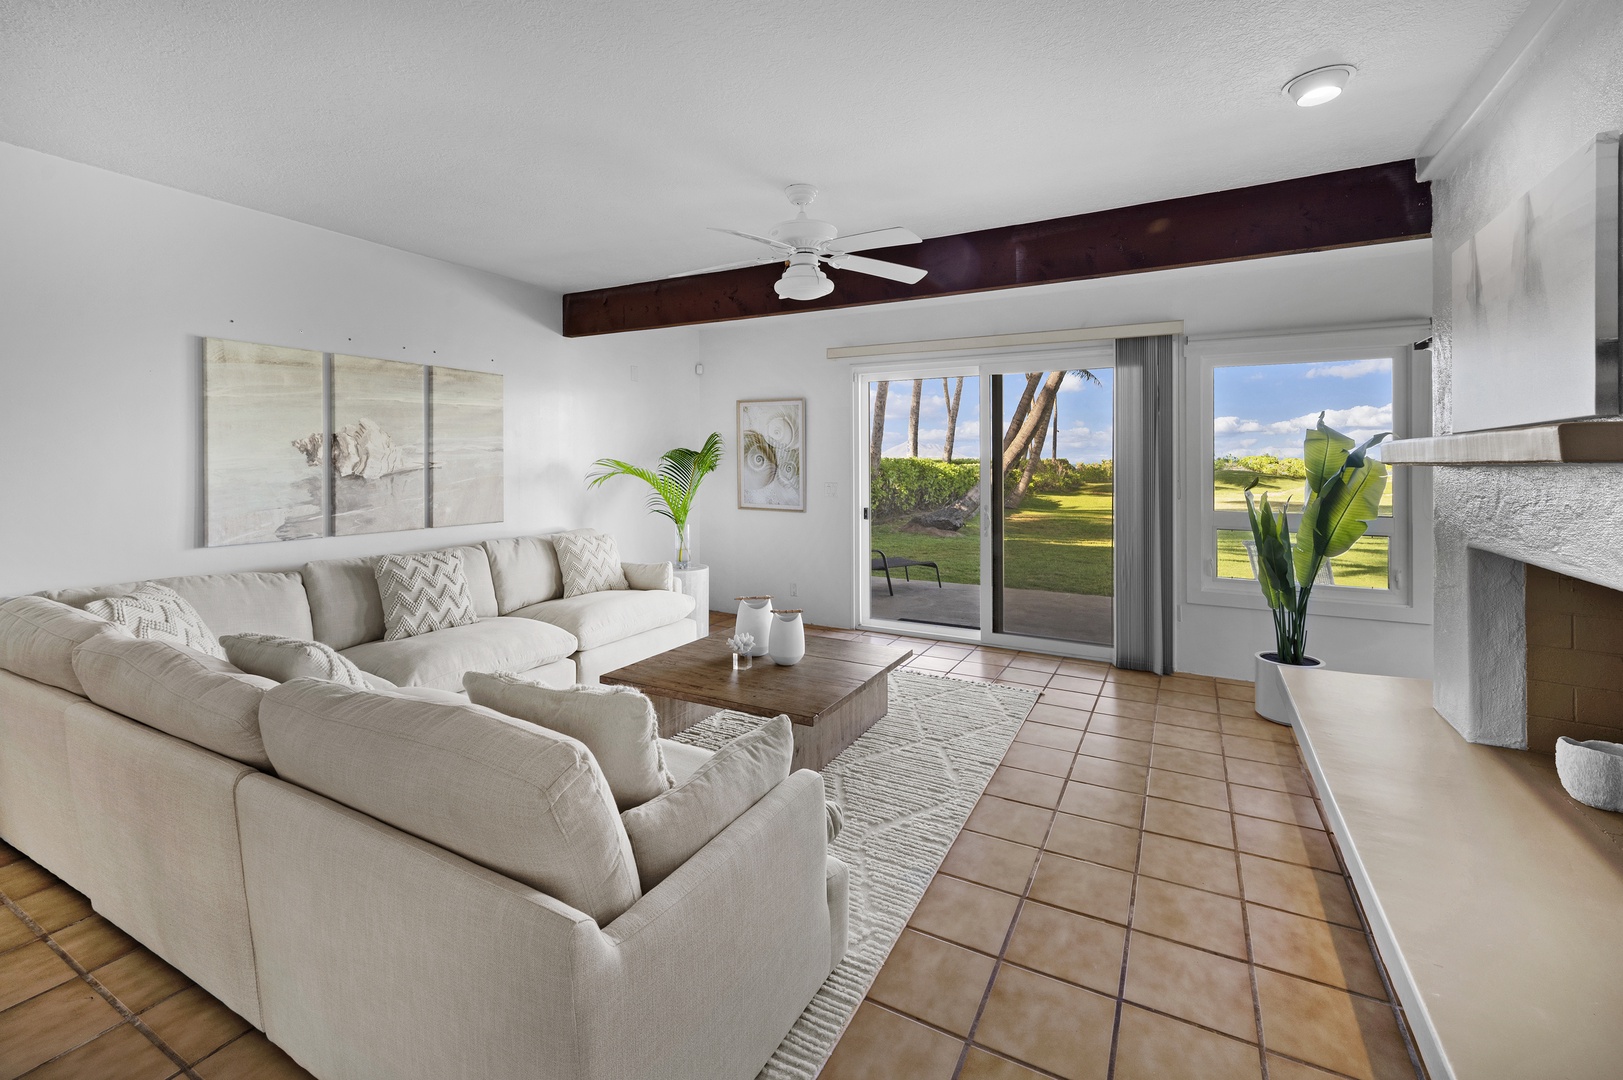 Kailua Vacation Rentals, Kailua Hale Kahakai - Bright and lively living room with sliding doors to your backyard paradise